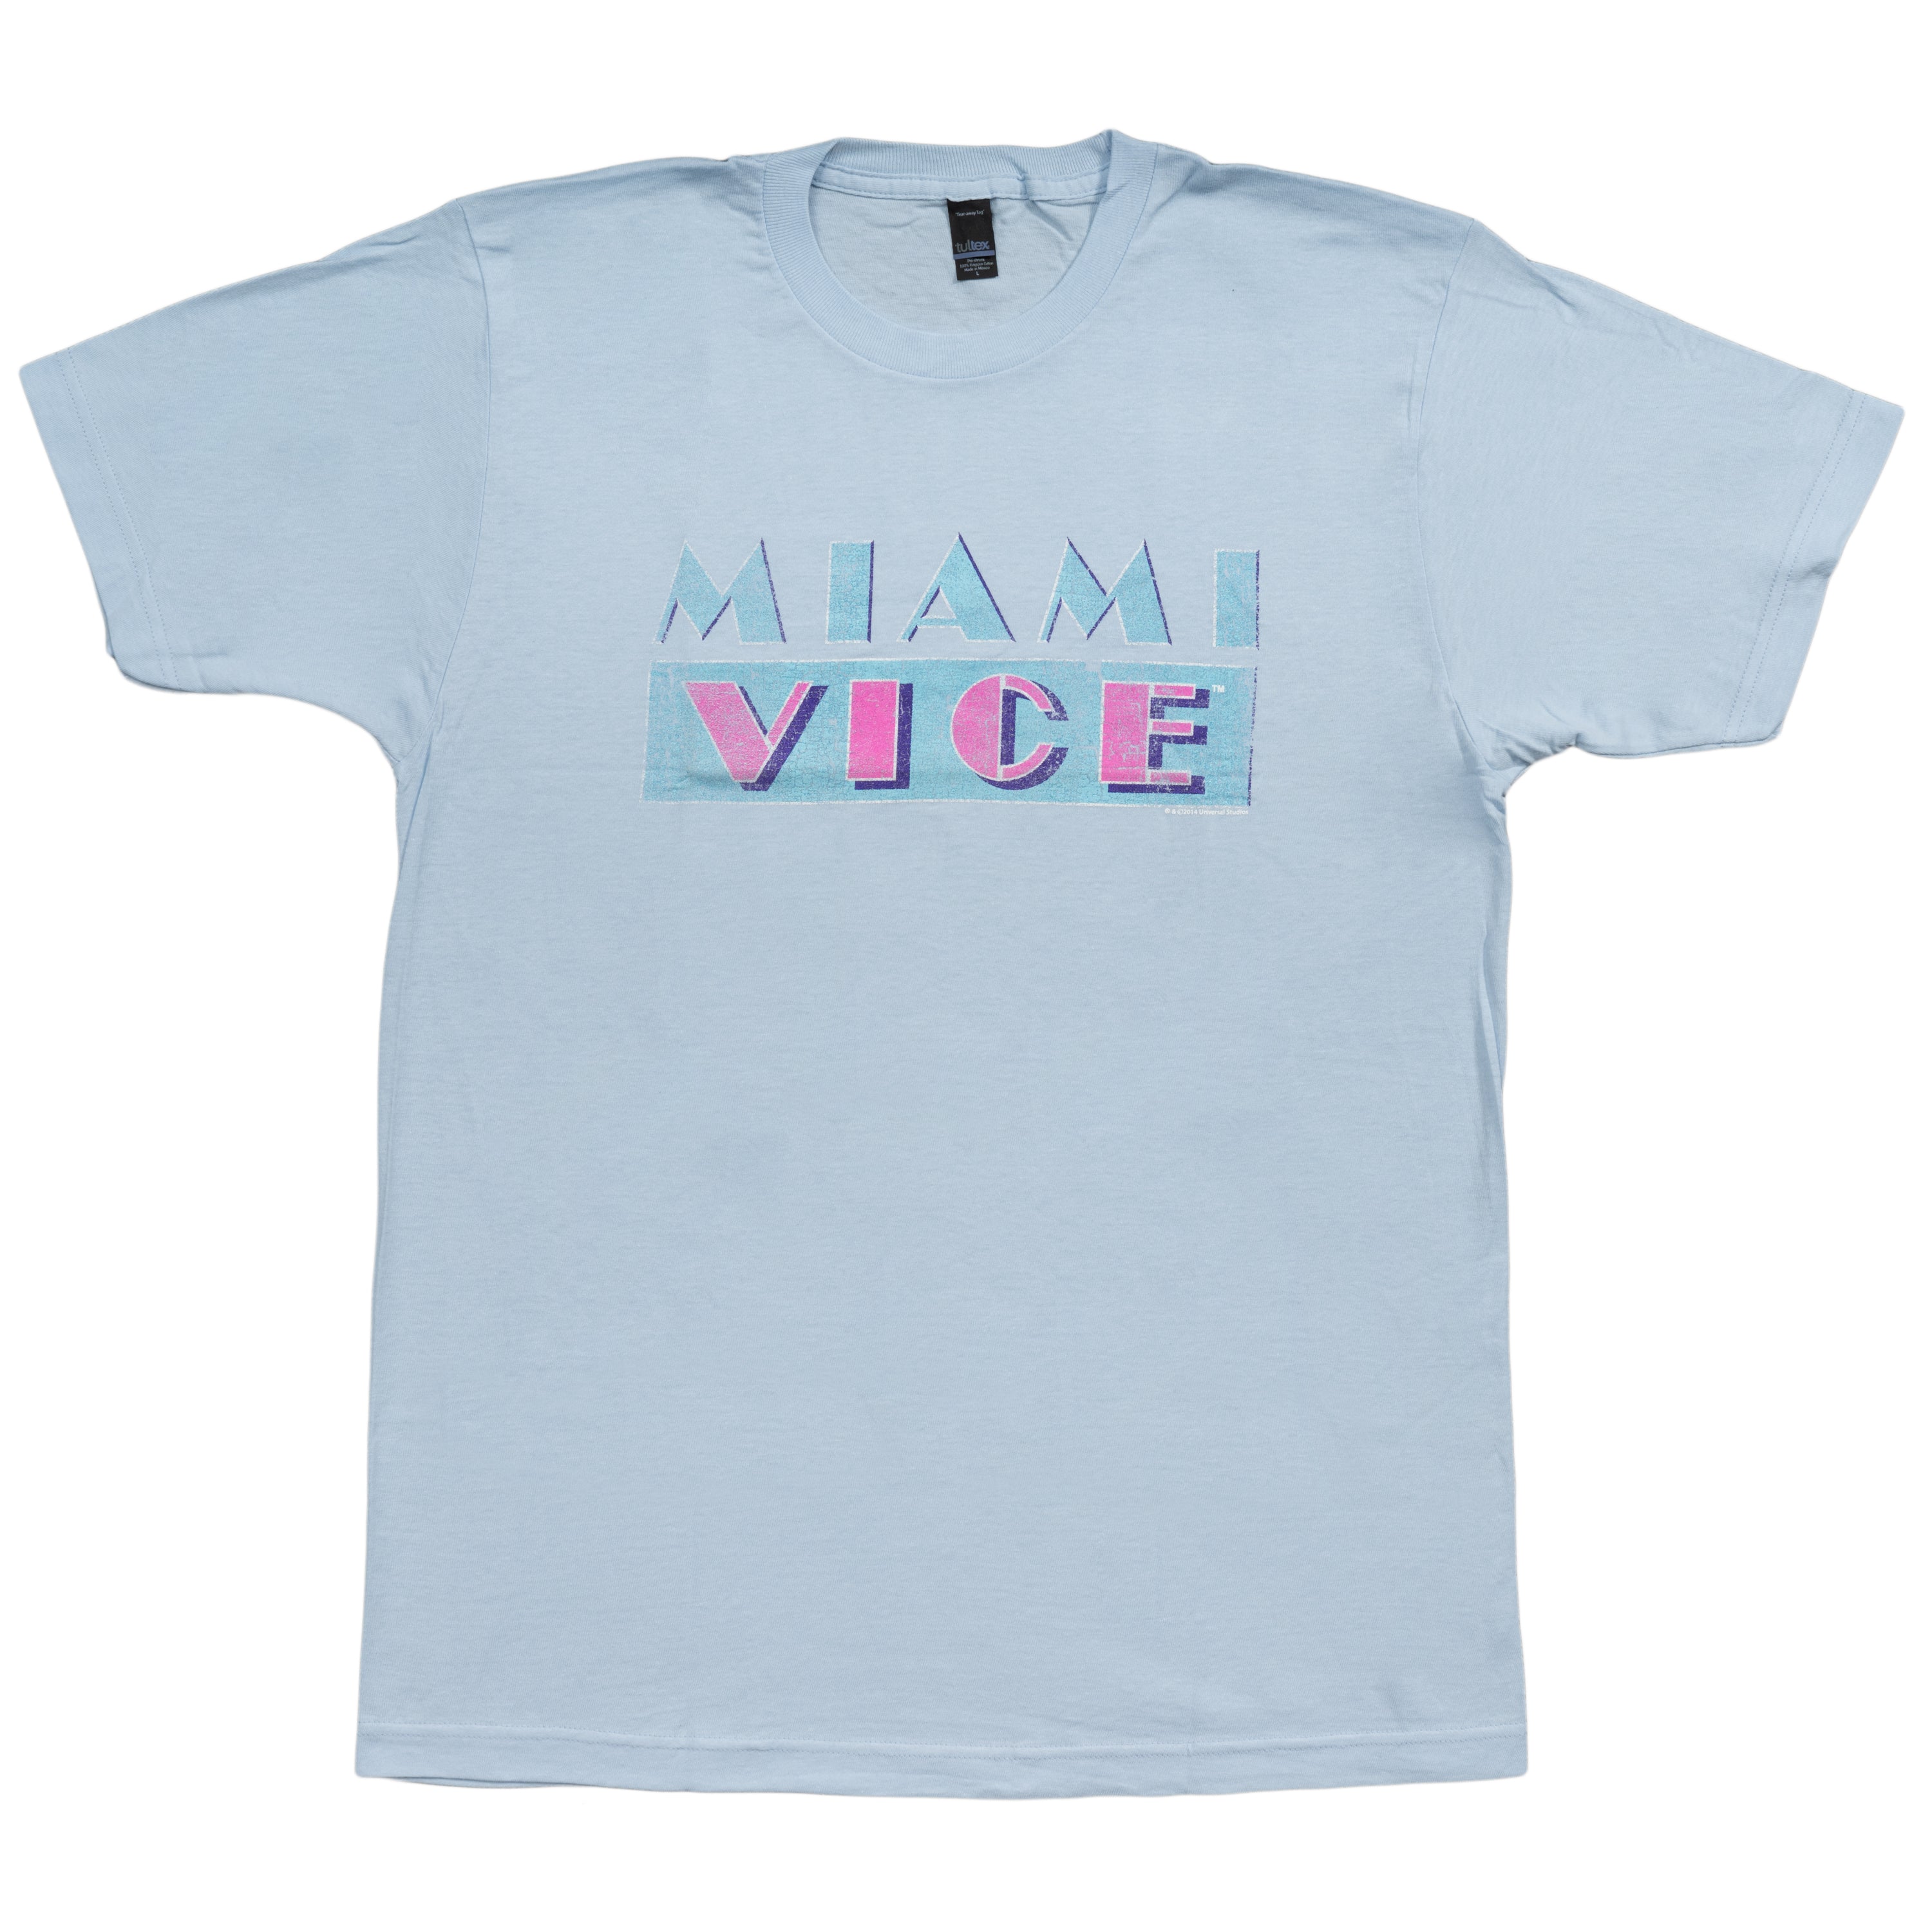 Miami Vice Distressed Logo Adult Light Blue T-Shirt